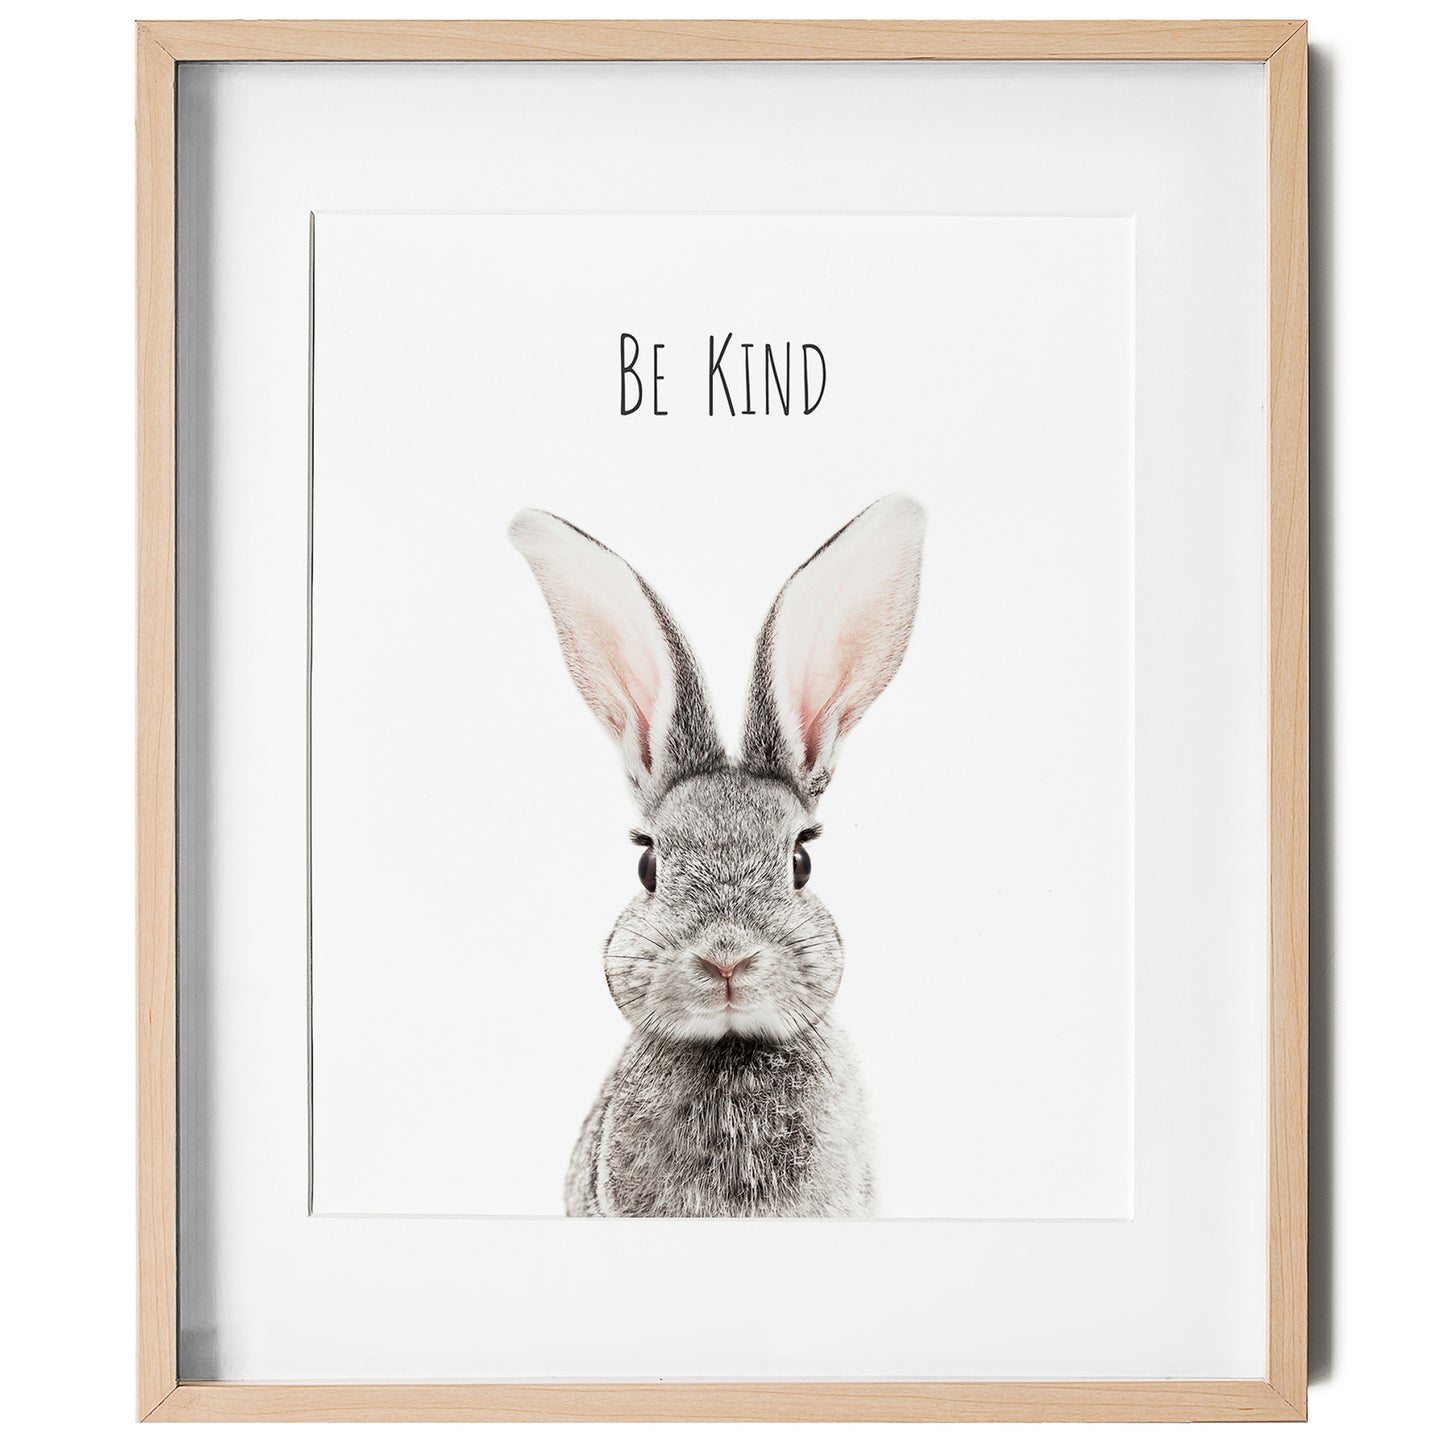 Bunny Be Kind - Inspirational Wall Art